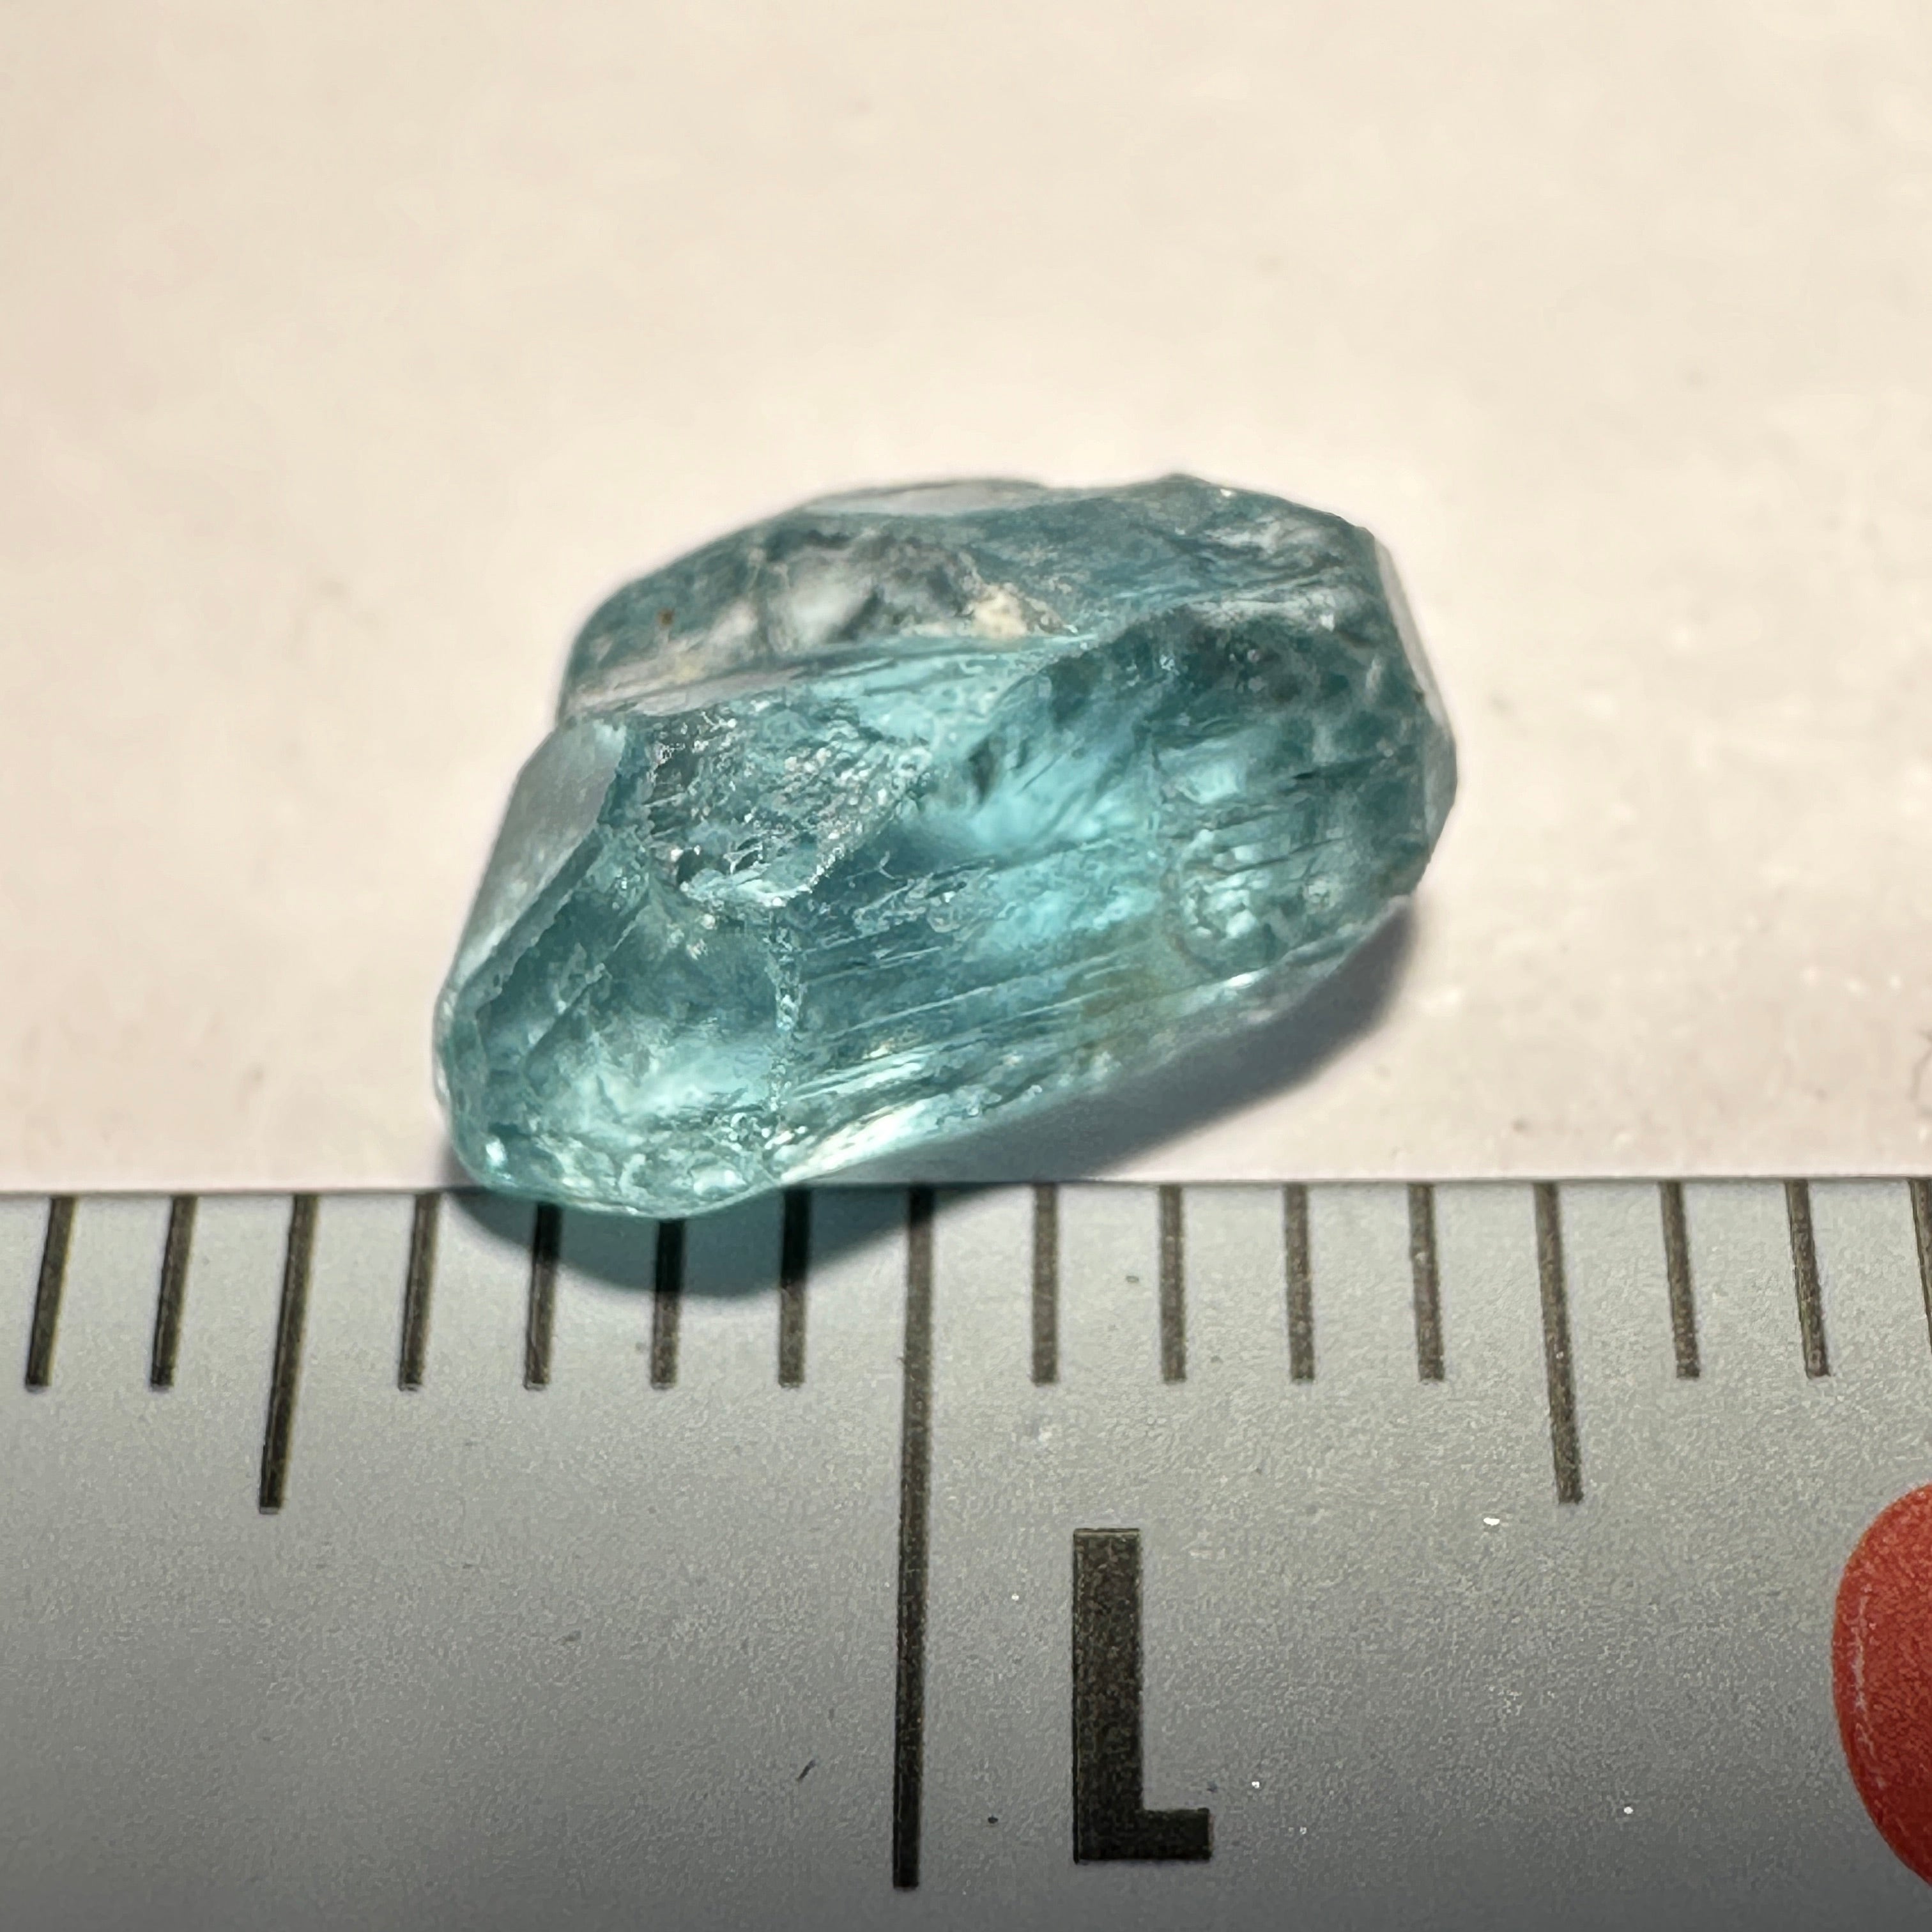 1.66ct Blue Apatite Crystal, Merelani, Tanzania, Untreated Unheated